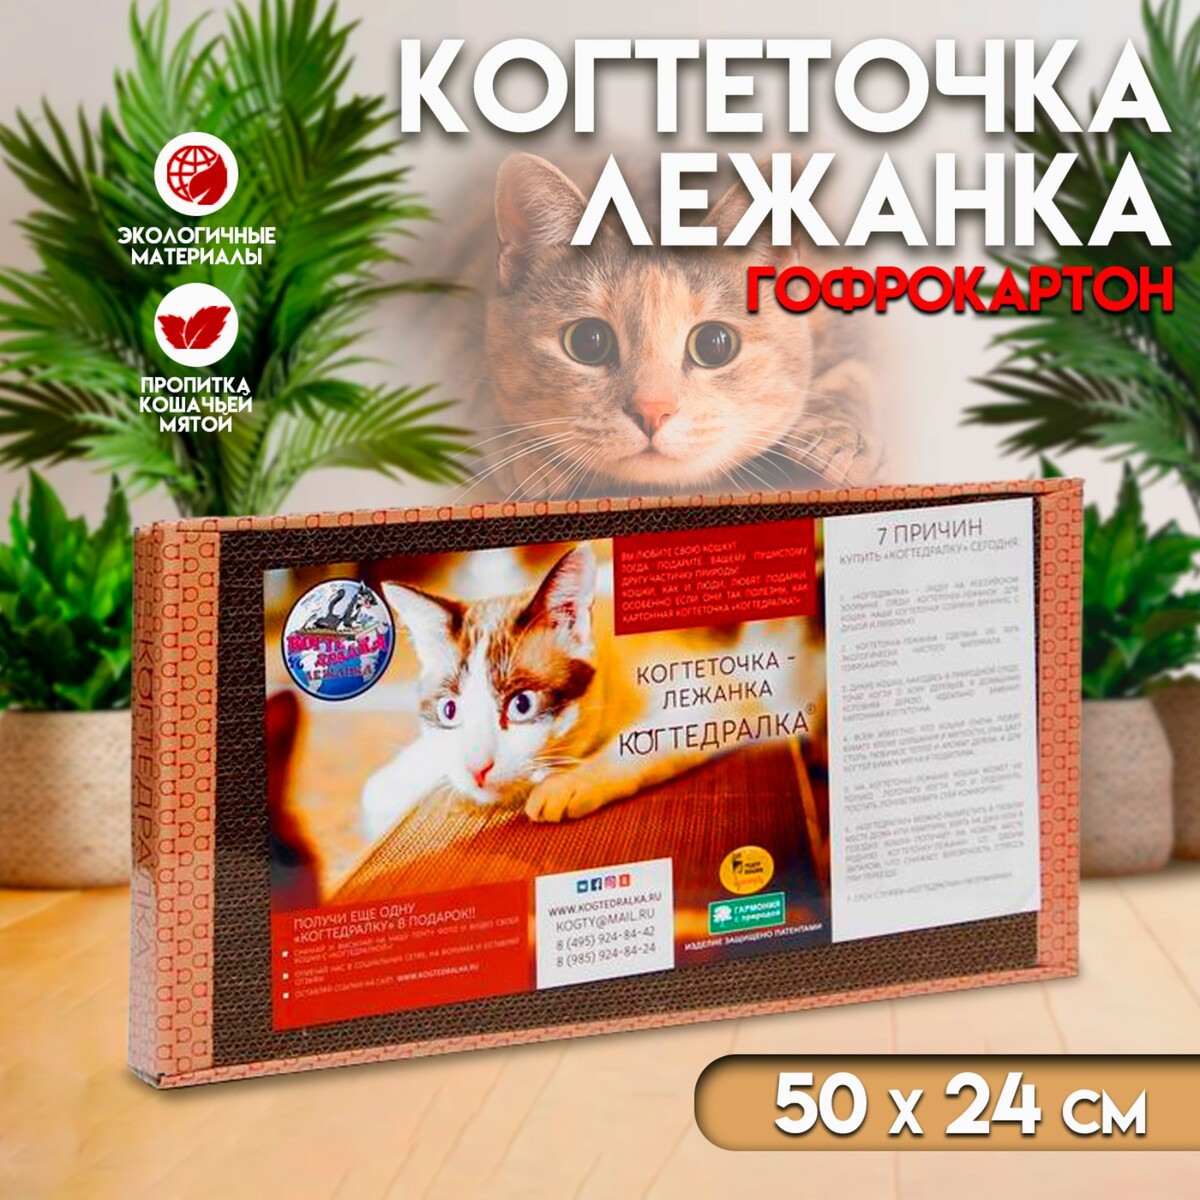 Домашняя когтеточка-лежанка для кошек, 50 x 24 см когтеточка